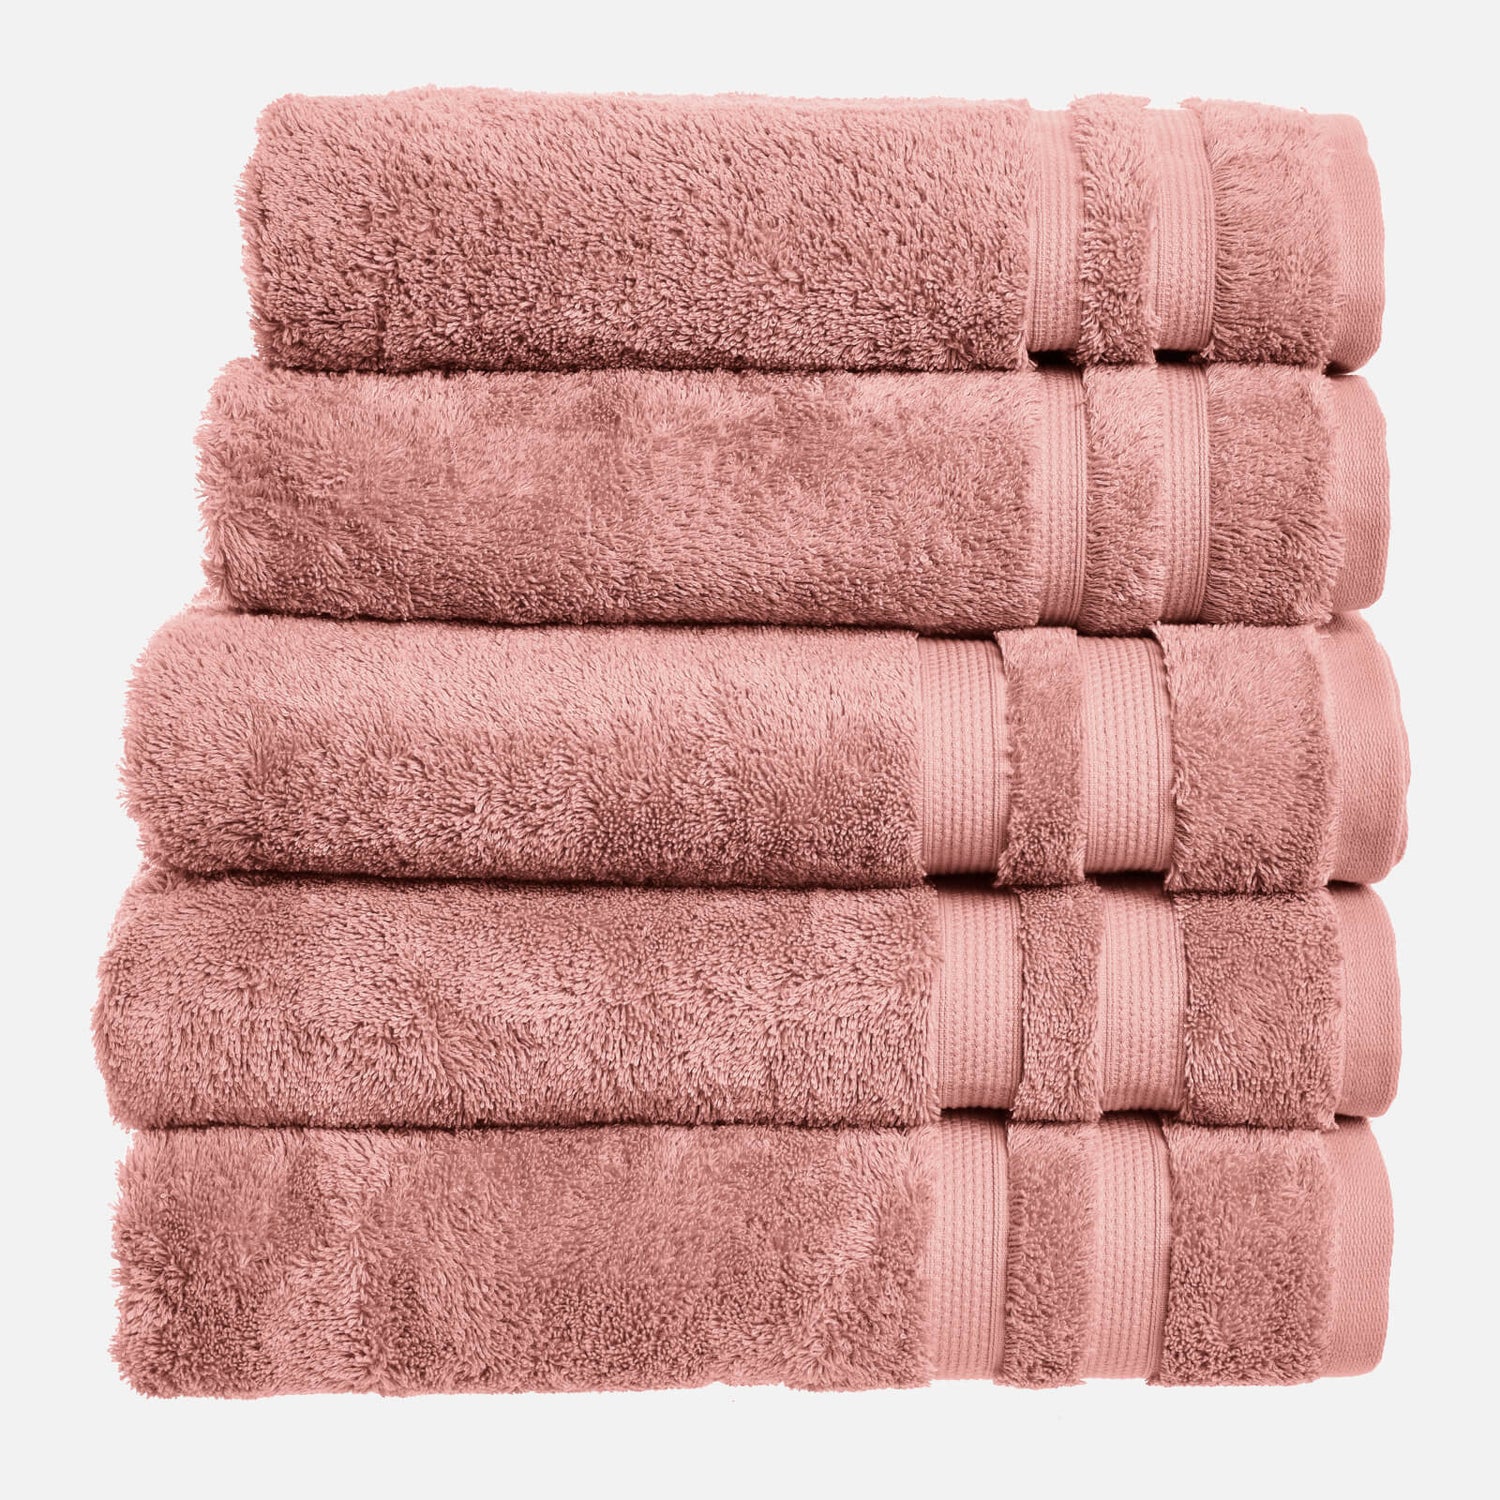 ïn home 100% Egyptian Cotton Pile 5 Piece Towel Bale - Blush